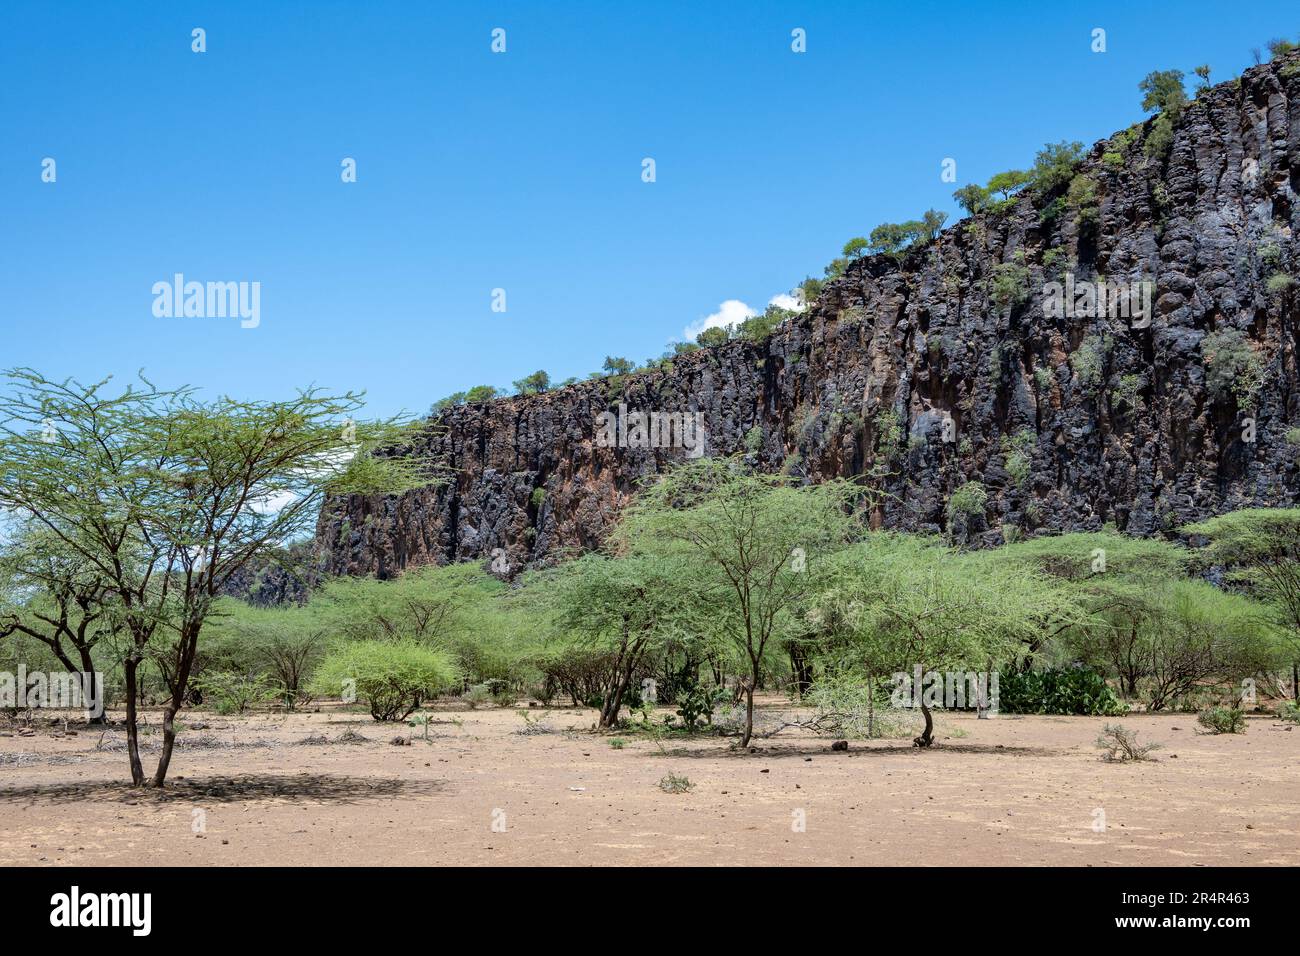 Präkambrianische metamorphe Felsen, die entlang des ostafrikanischen Rift Valley freigelegt wurden. Kenia, Afrika. Stockfoto